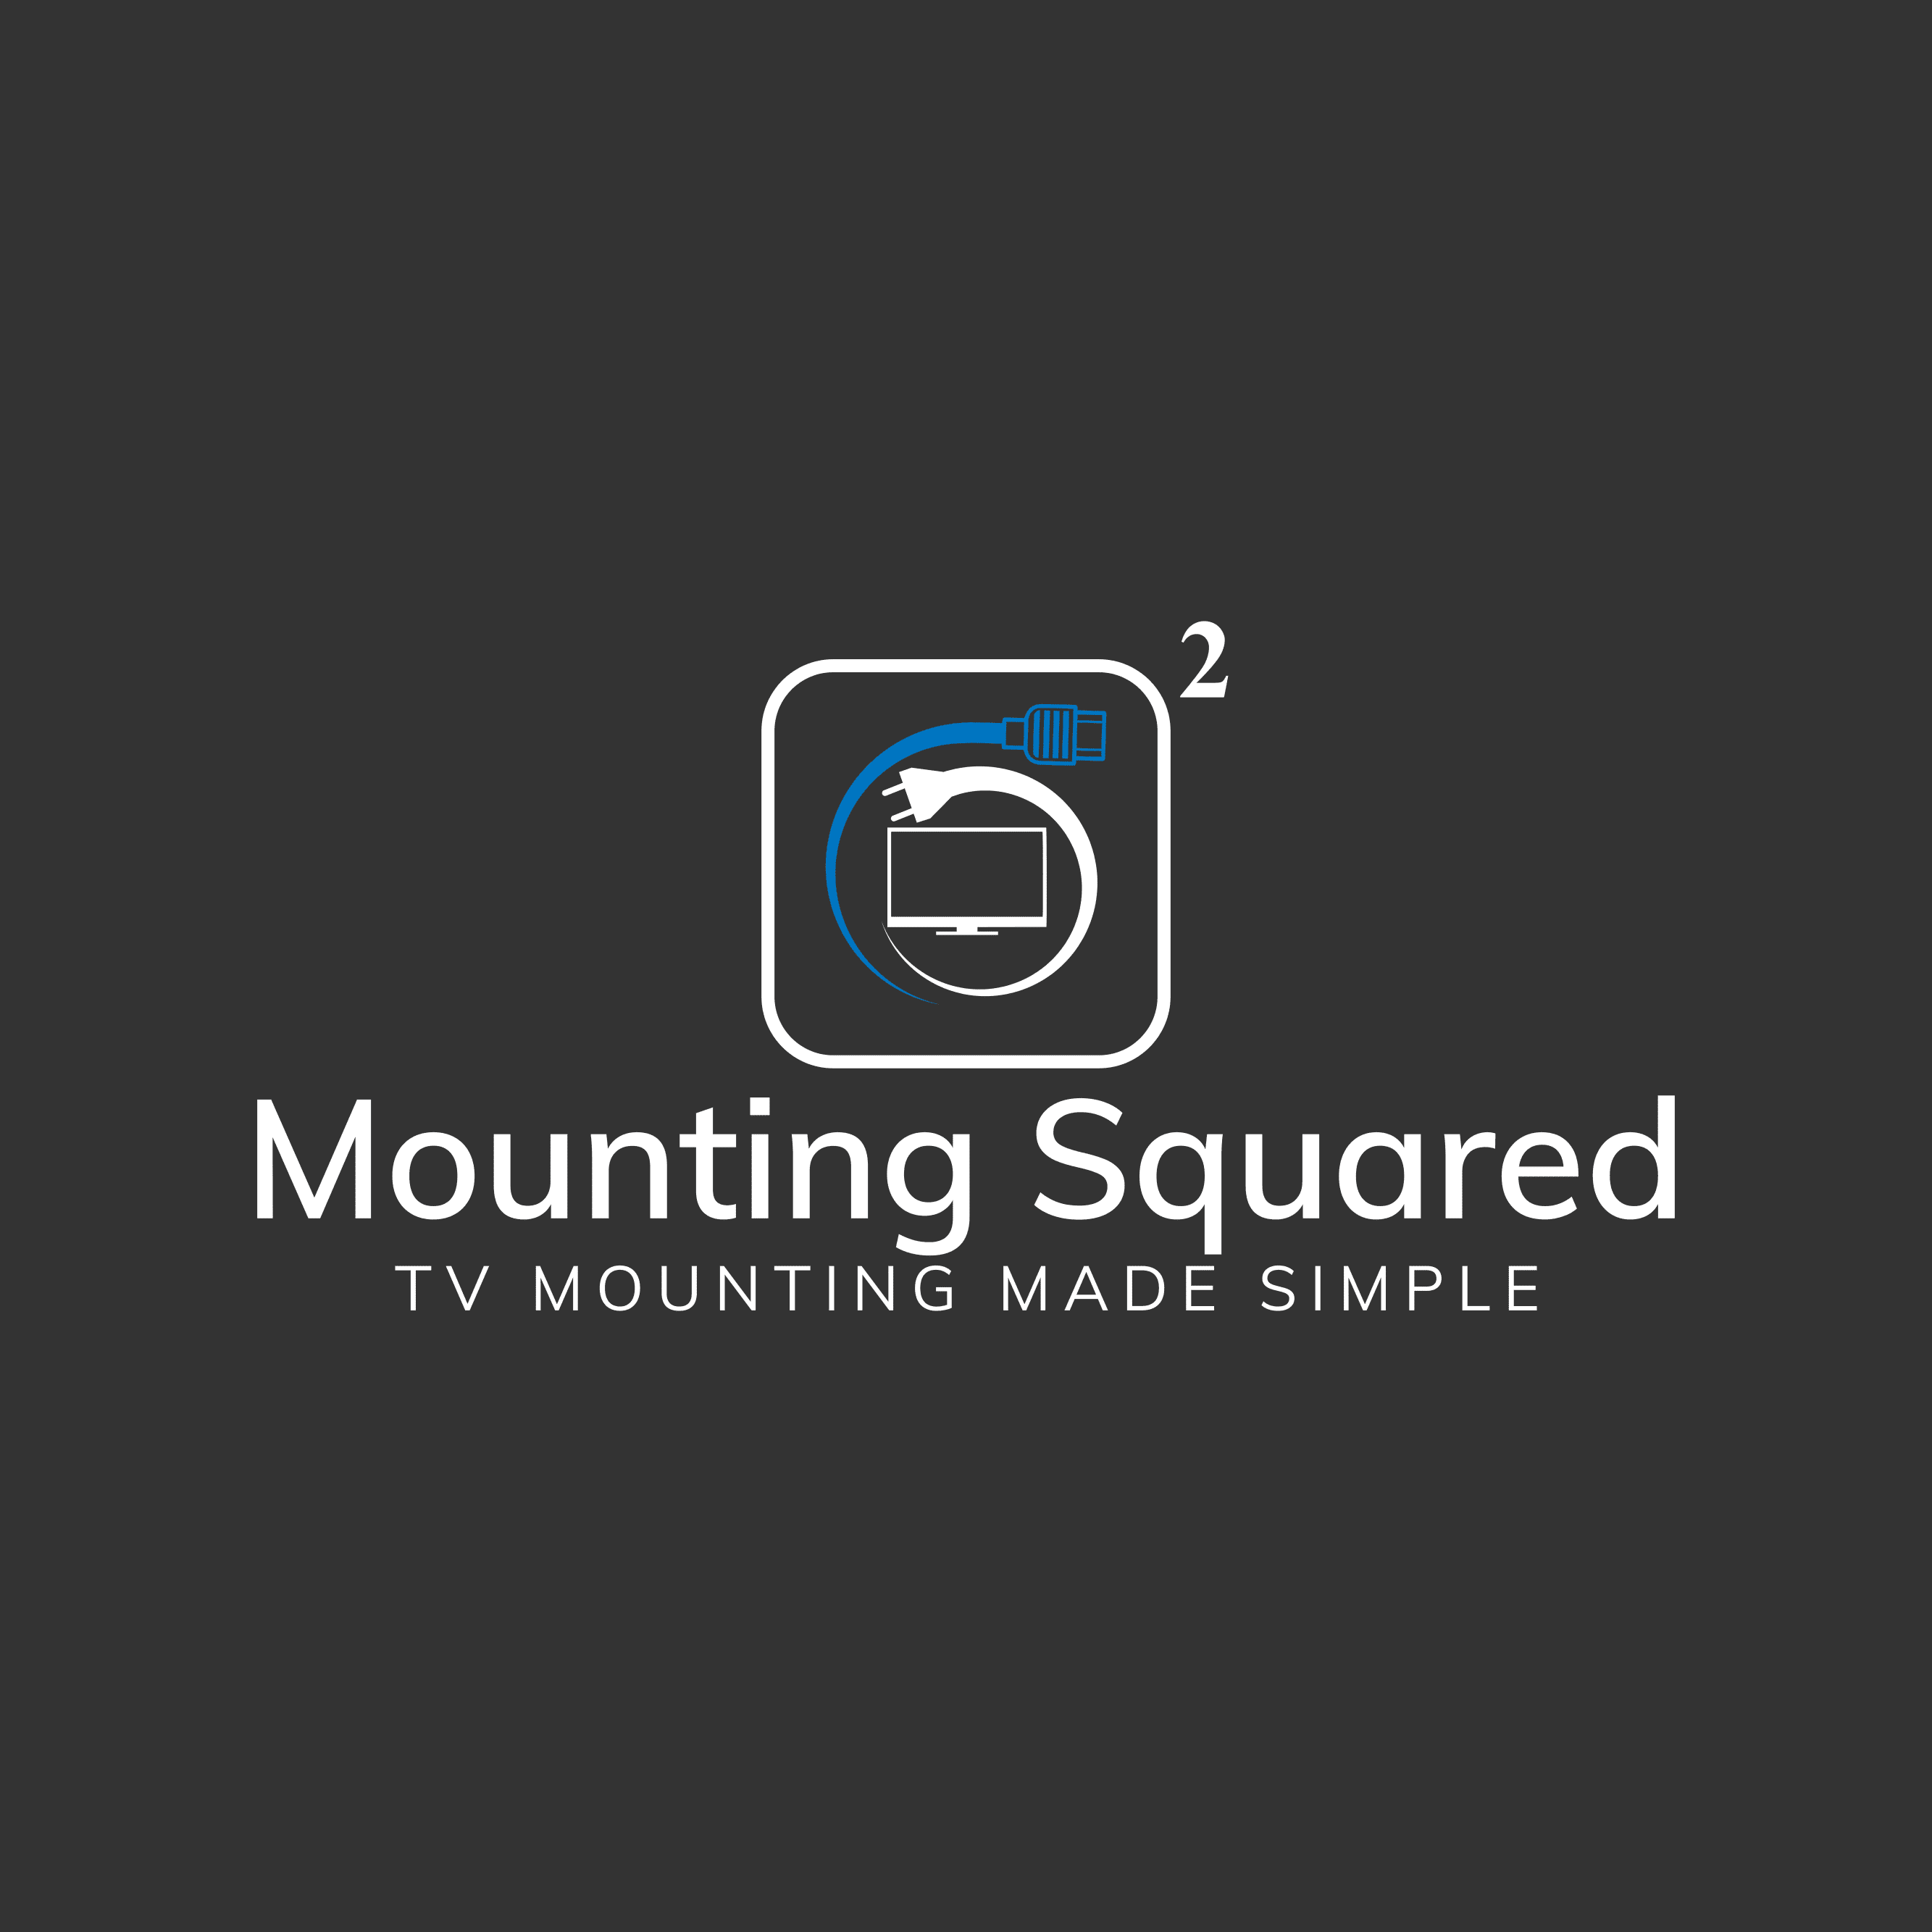 Mounting Squared²